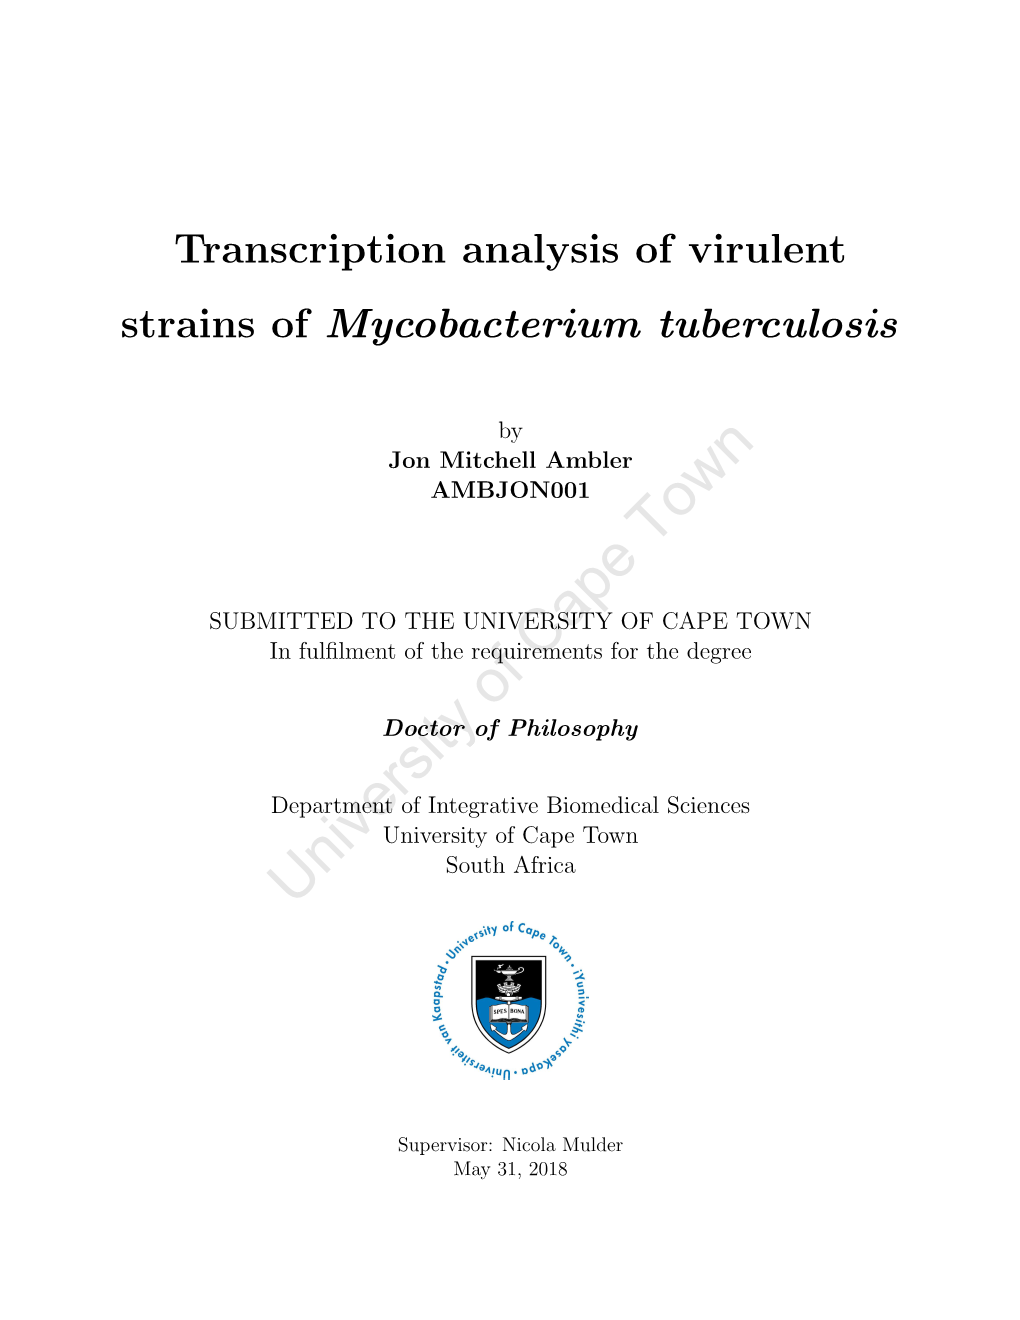 Transcription Analysis of Virulent Strains of Mycobacterium Tuberculosis